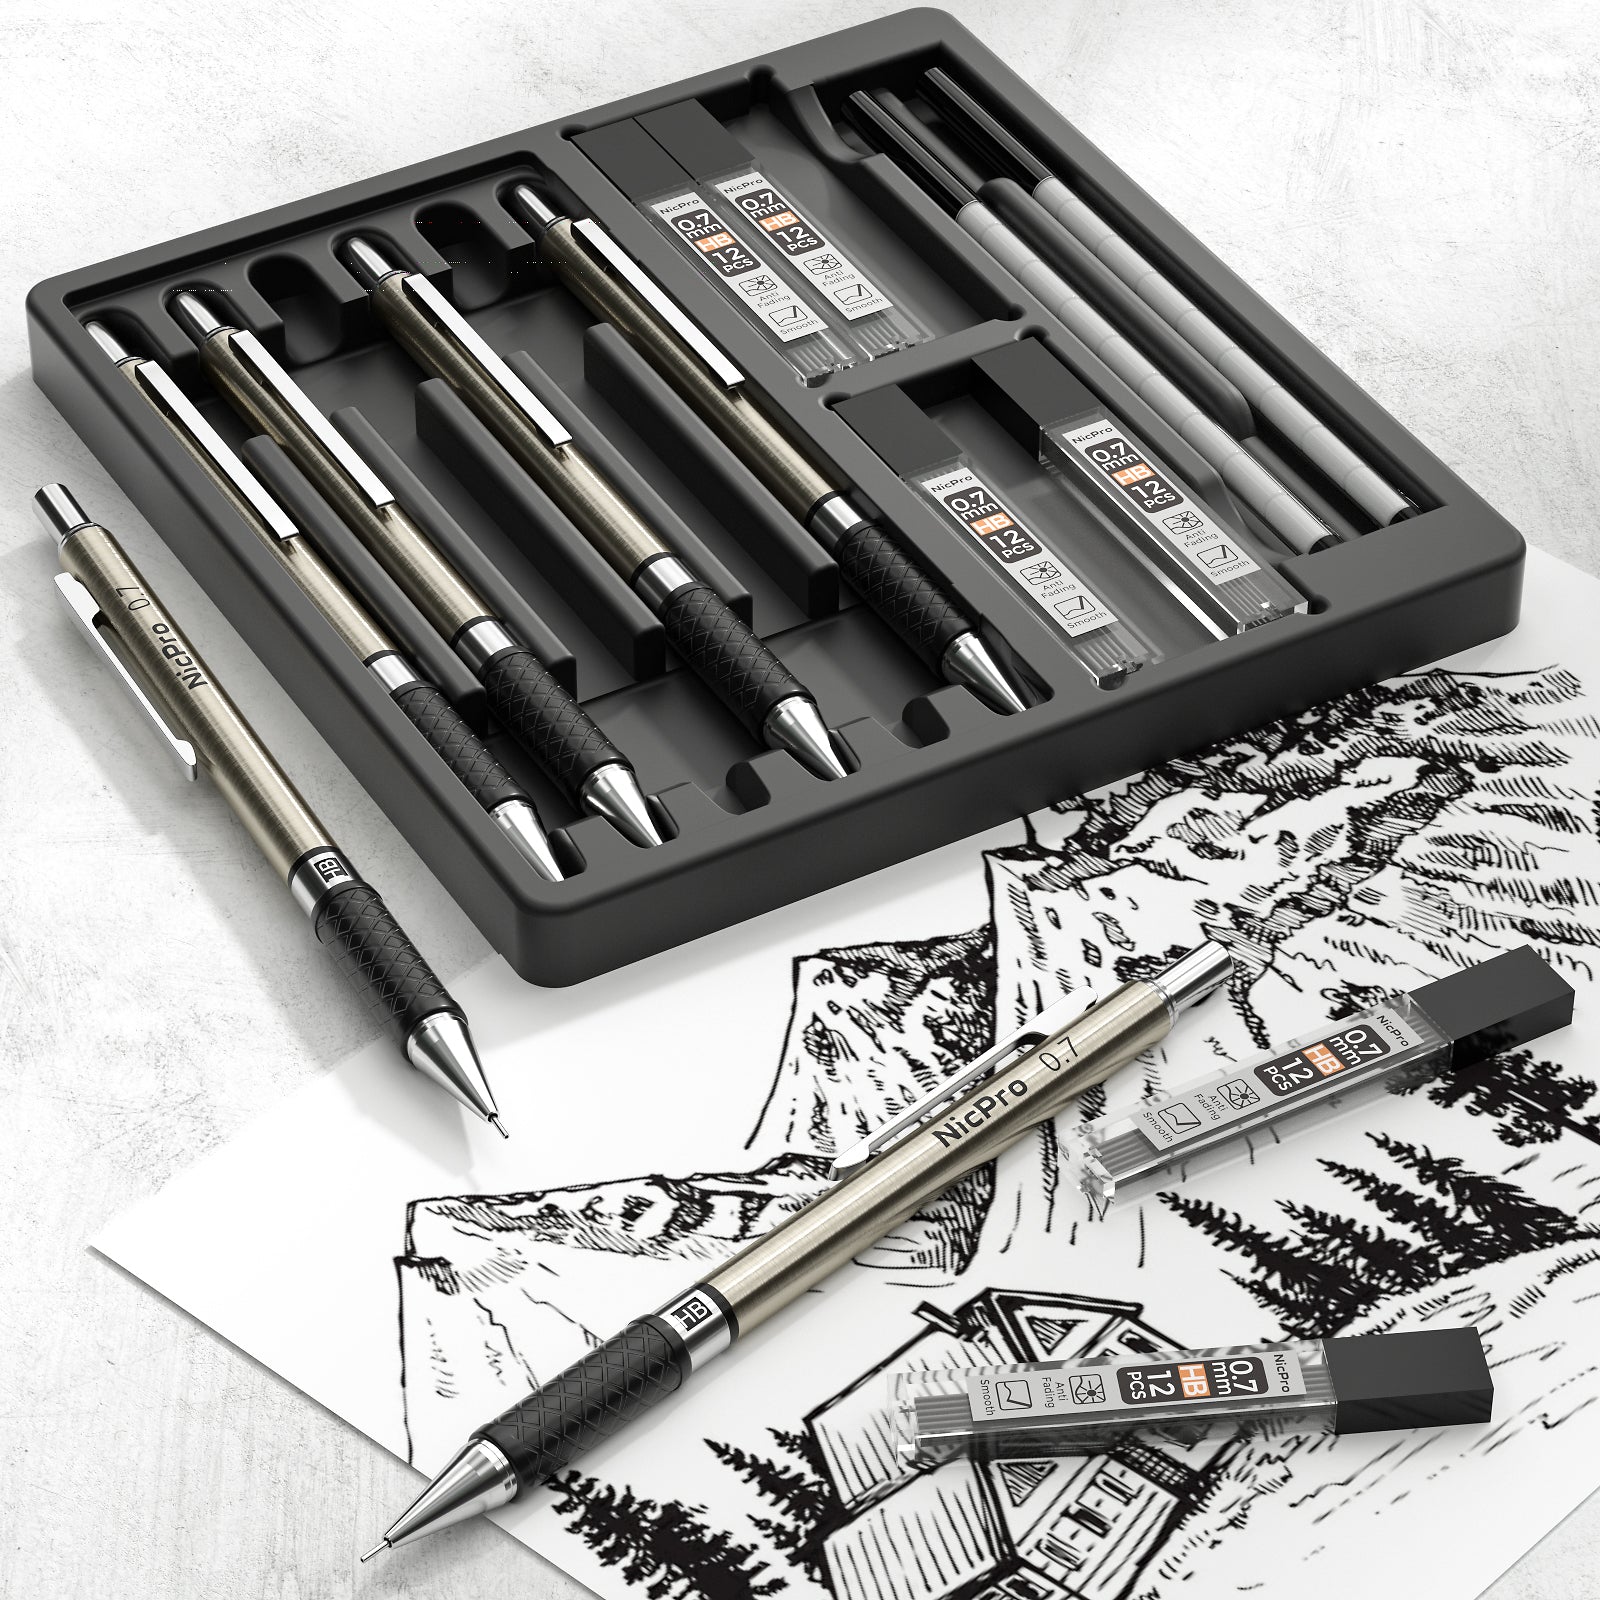 Nicpro 6pcs Art Mechanical Pencils Set, 3 Pcs Metal Drafting Pencil 0.5 mm & 0.7 mm & 0.9 mm and 3 Pcs 2mm Graphite Lead Holder (2B HB 2H) for Writing